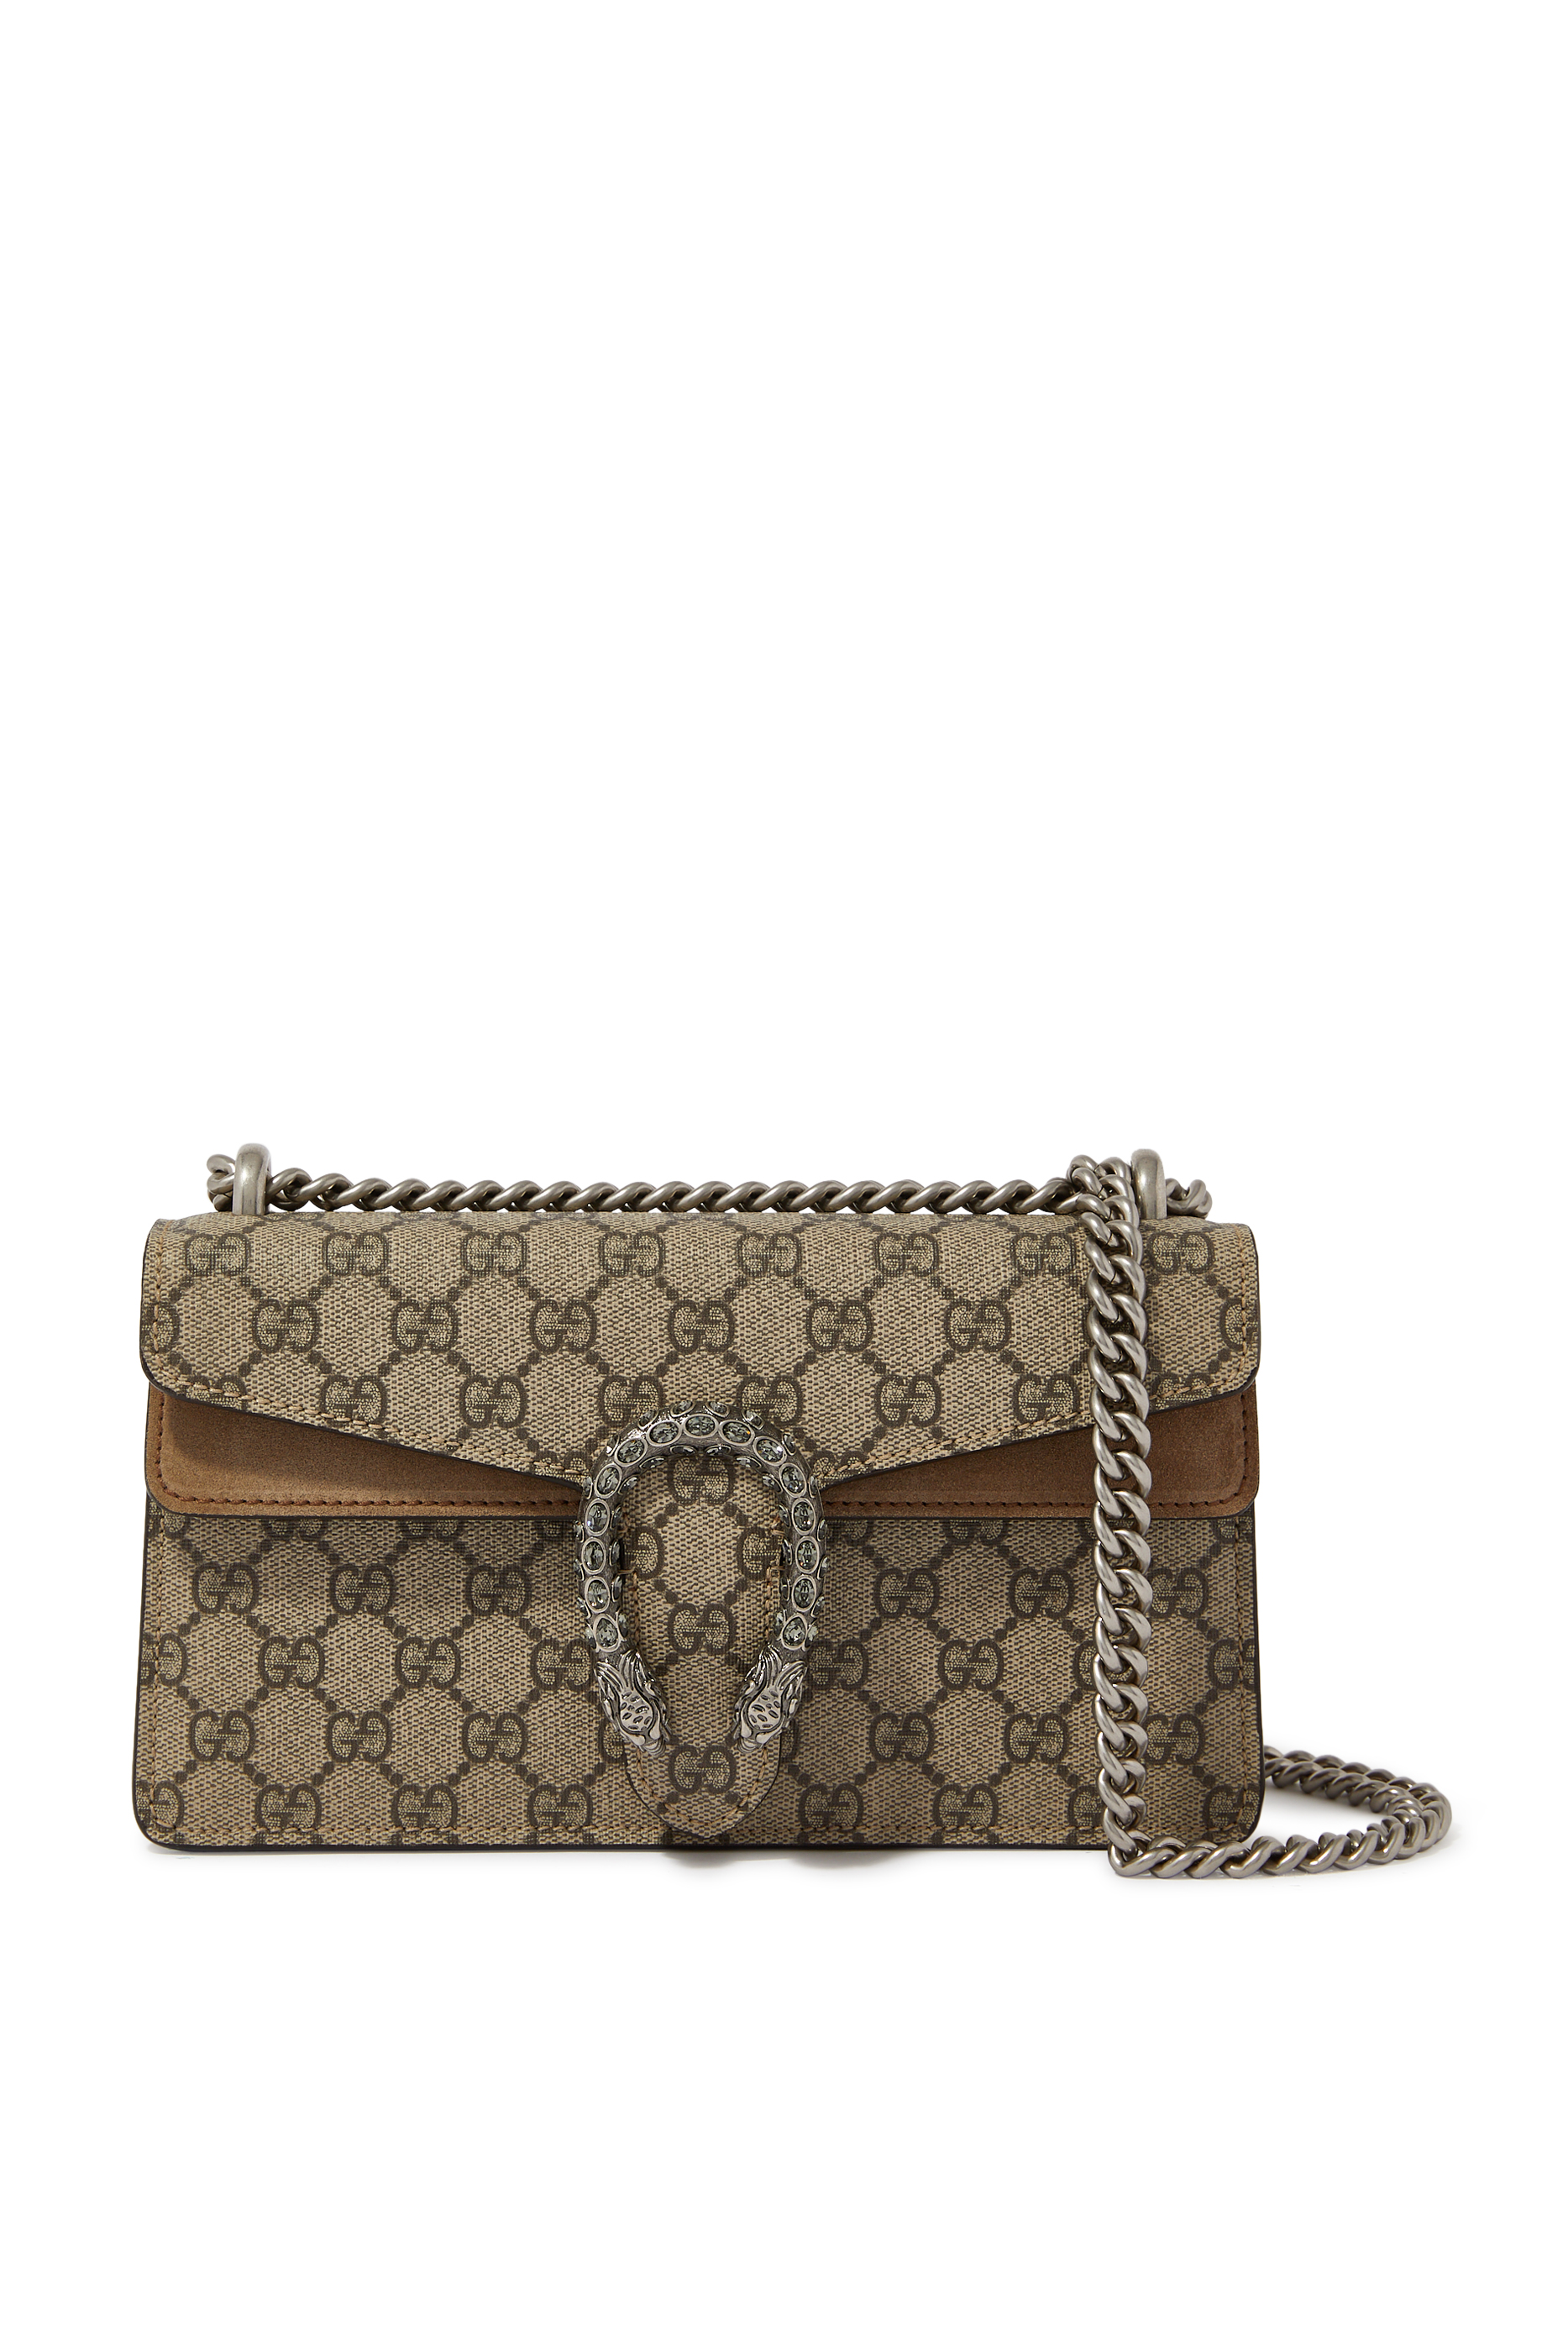 Buy Gucci Dionysus GG Small Shoulder Bag for Womens | Bloomingdale's UAE